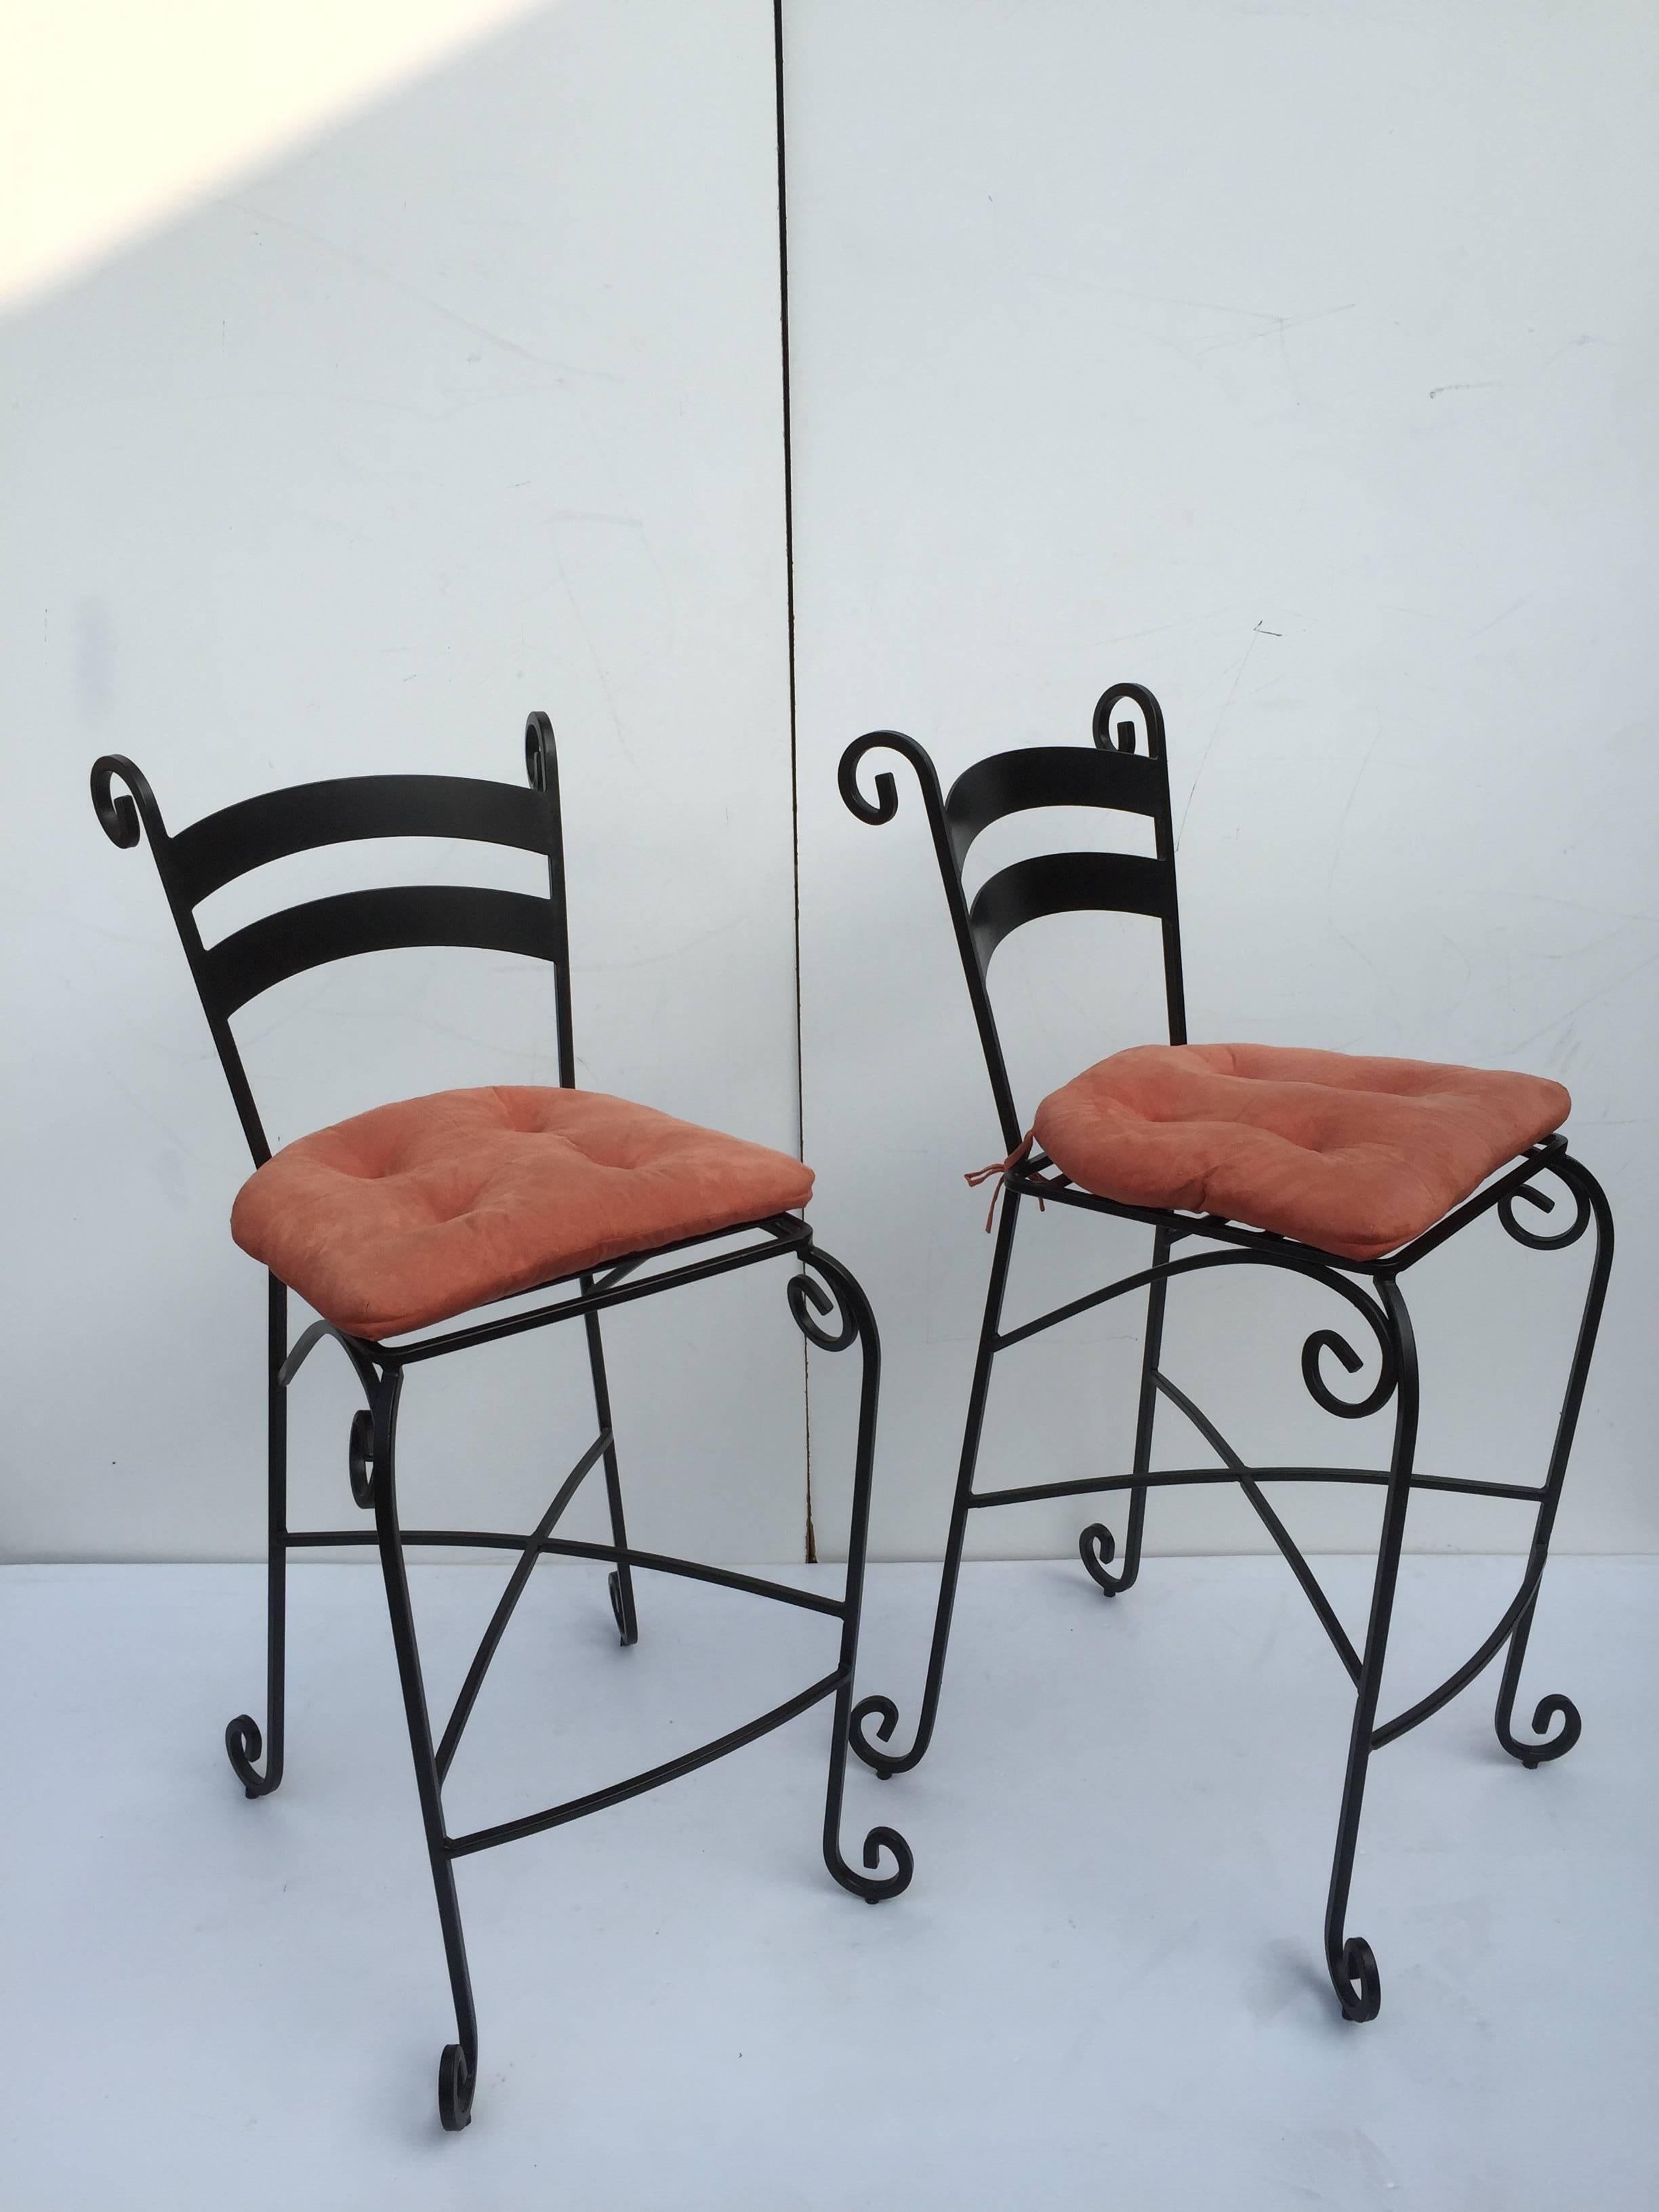 wrought iron stools -china -b2b -forum -blog -wikipedia -.cn -.gov -alibaba